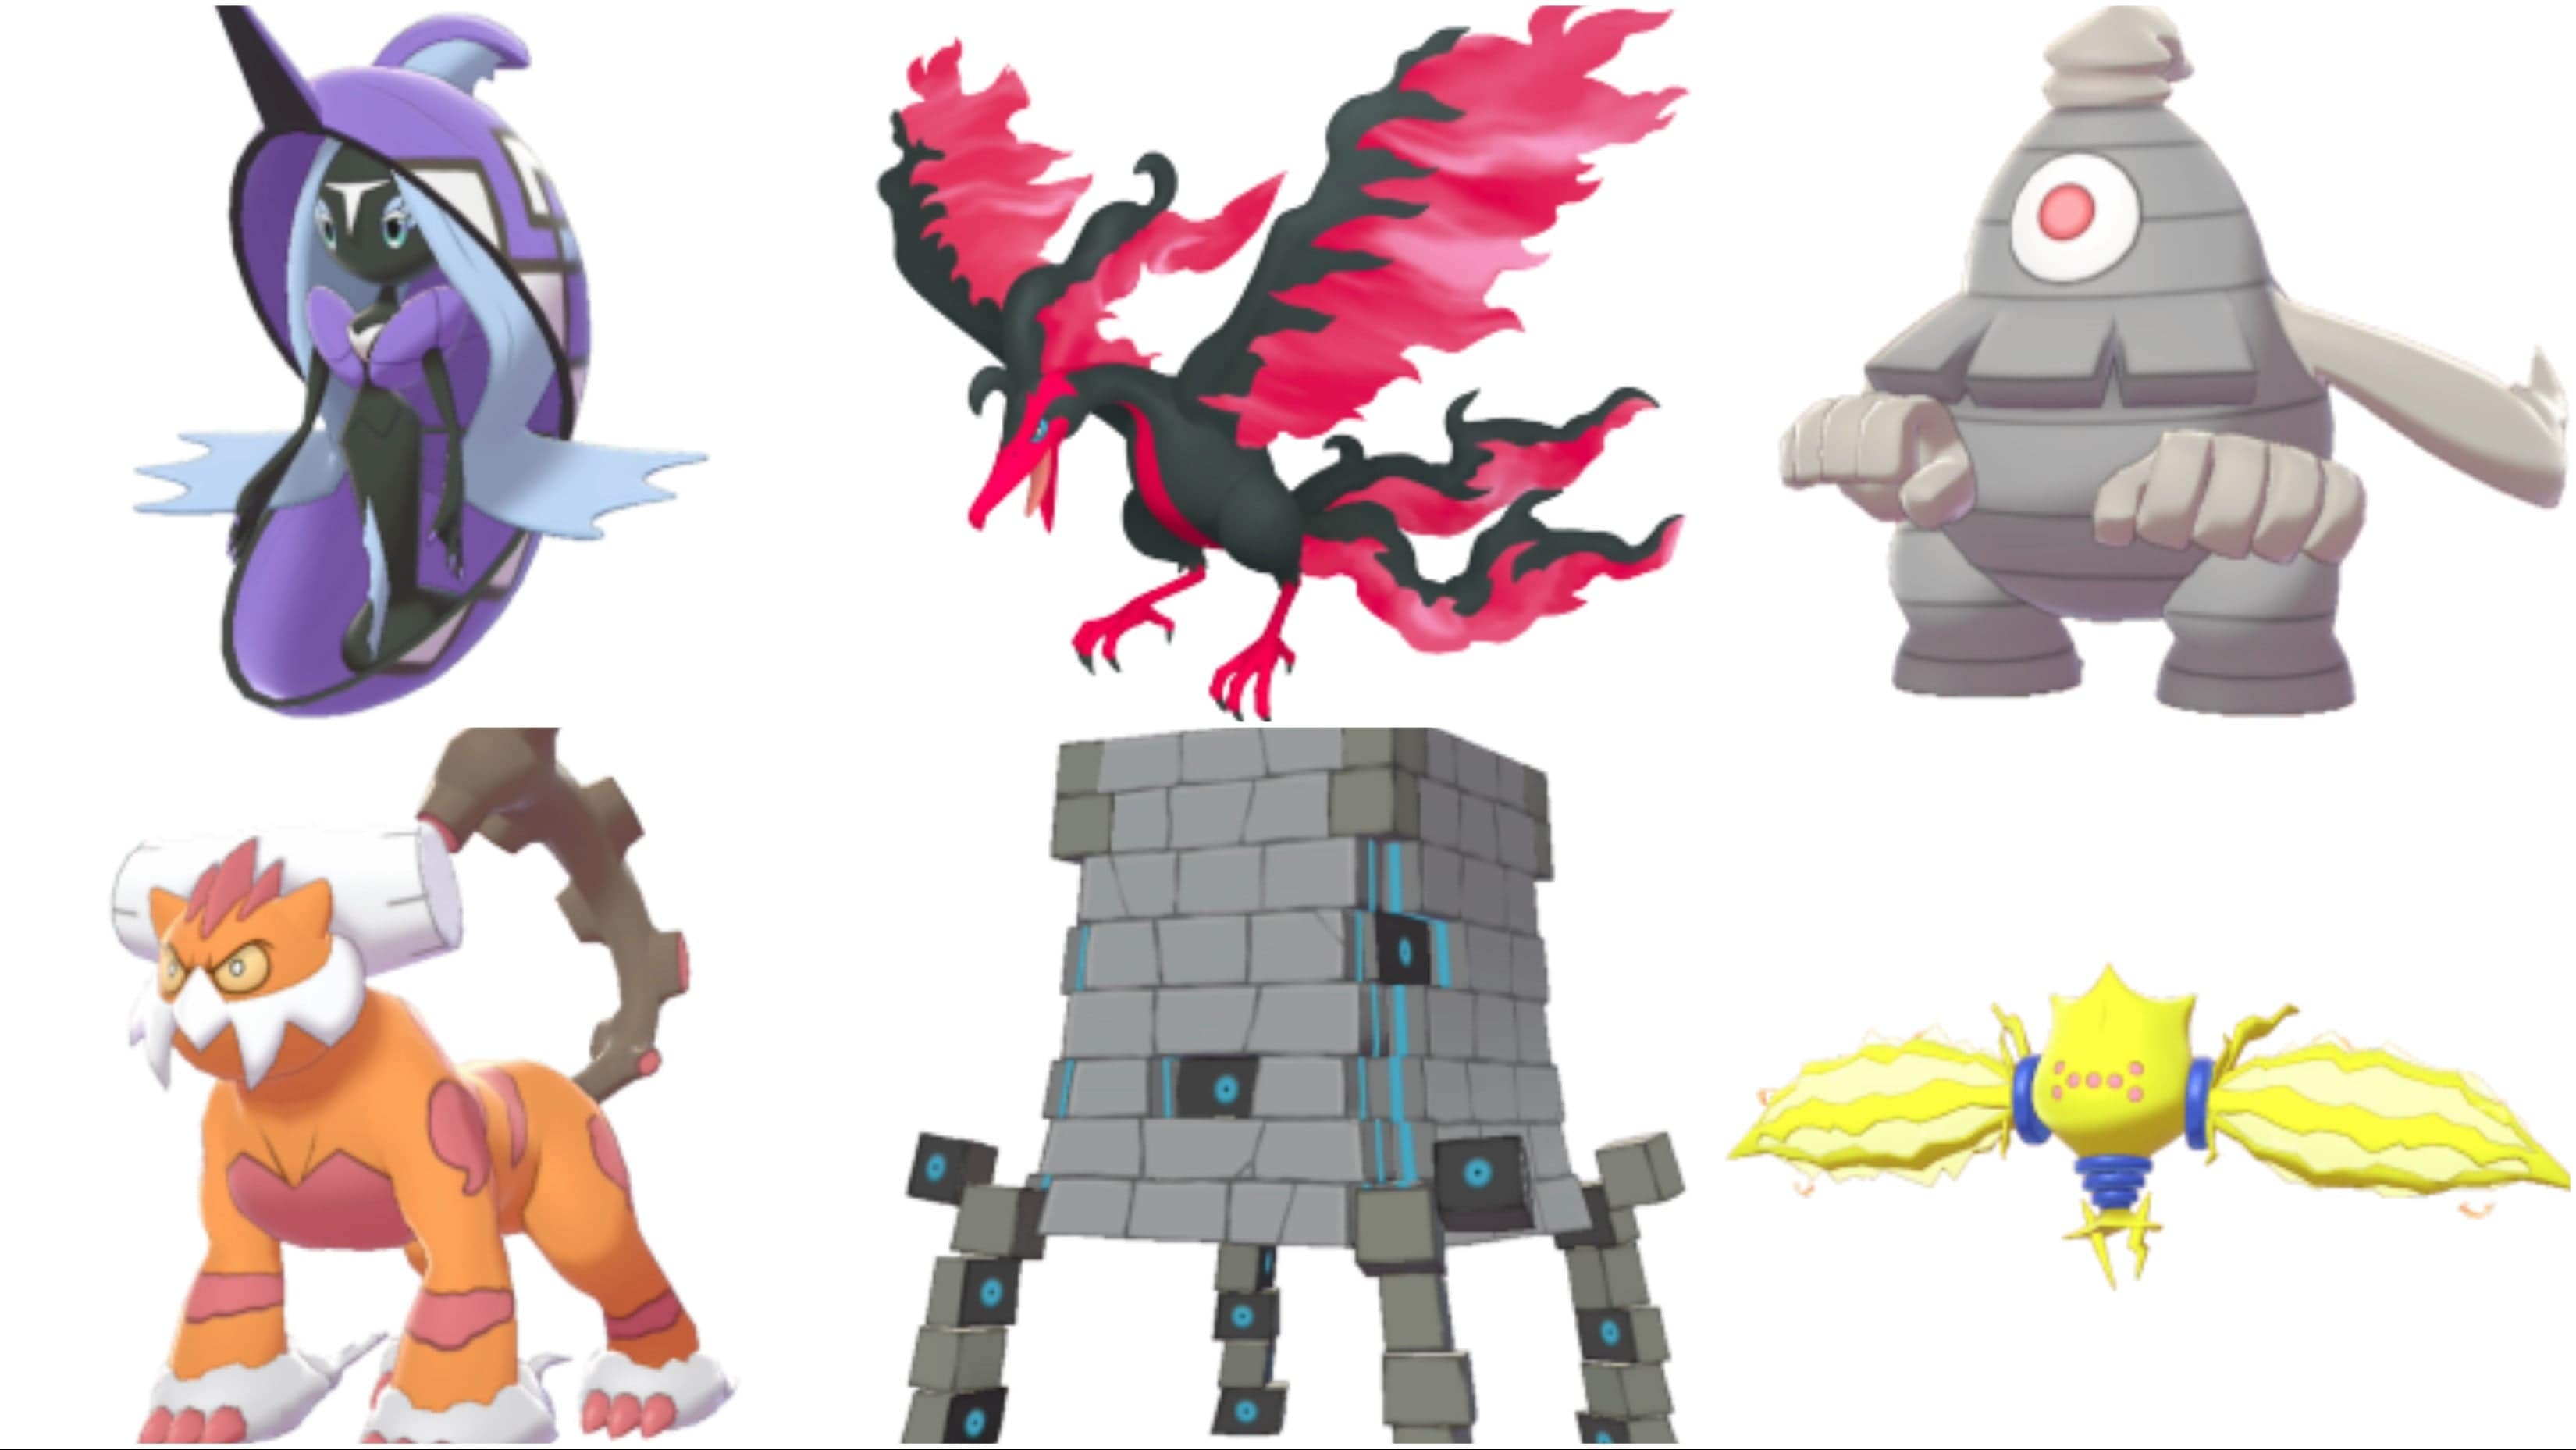 Galarian Moltres — Pokémon Sword & Shield movesets and strategies